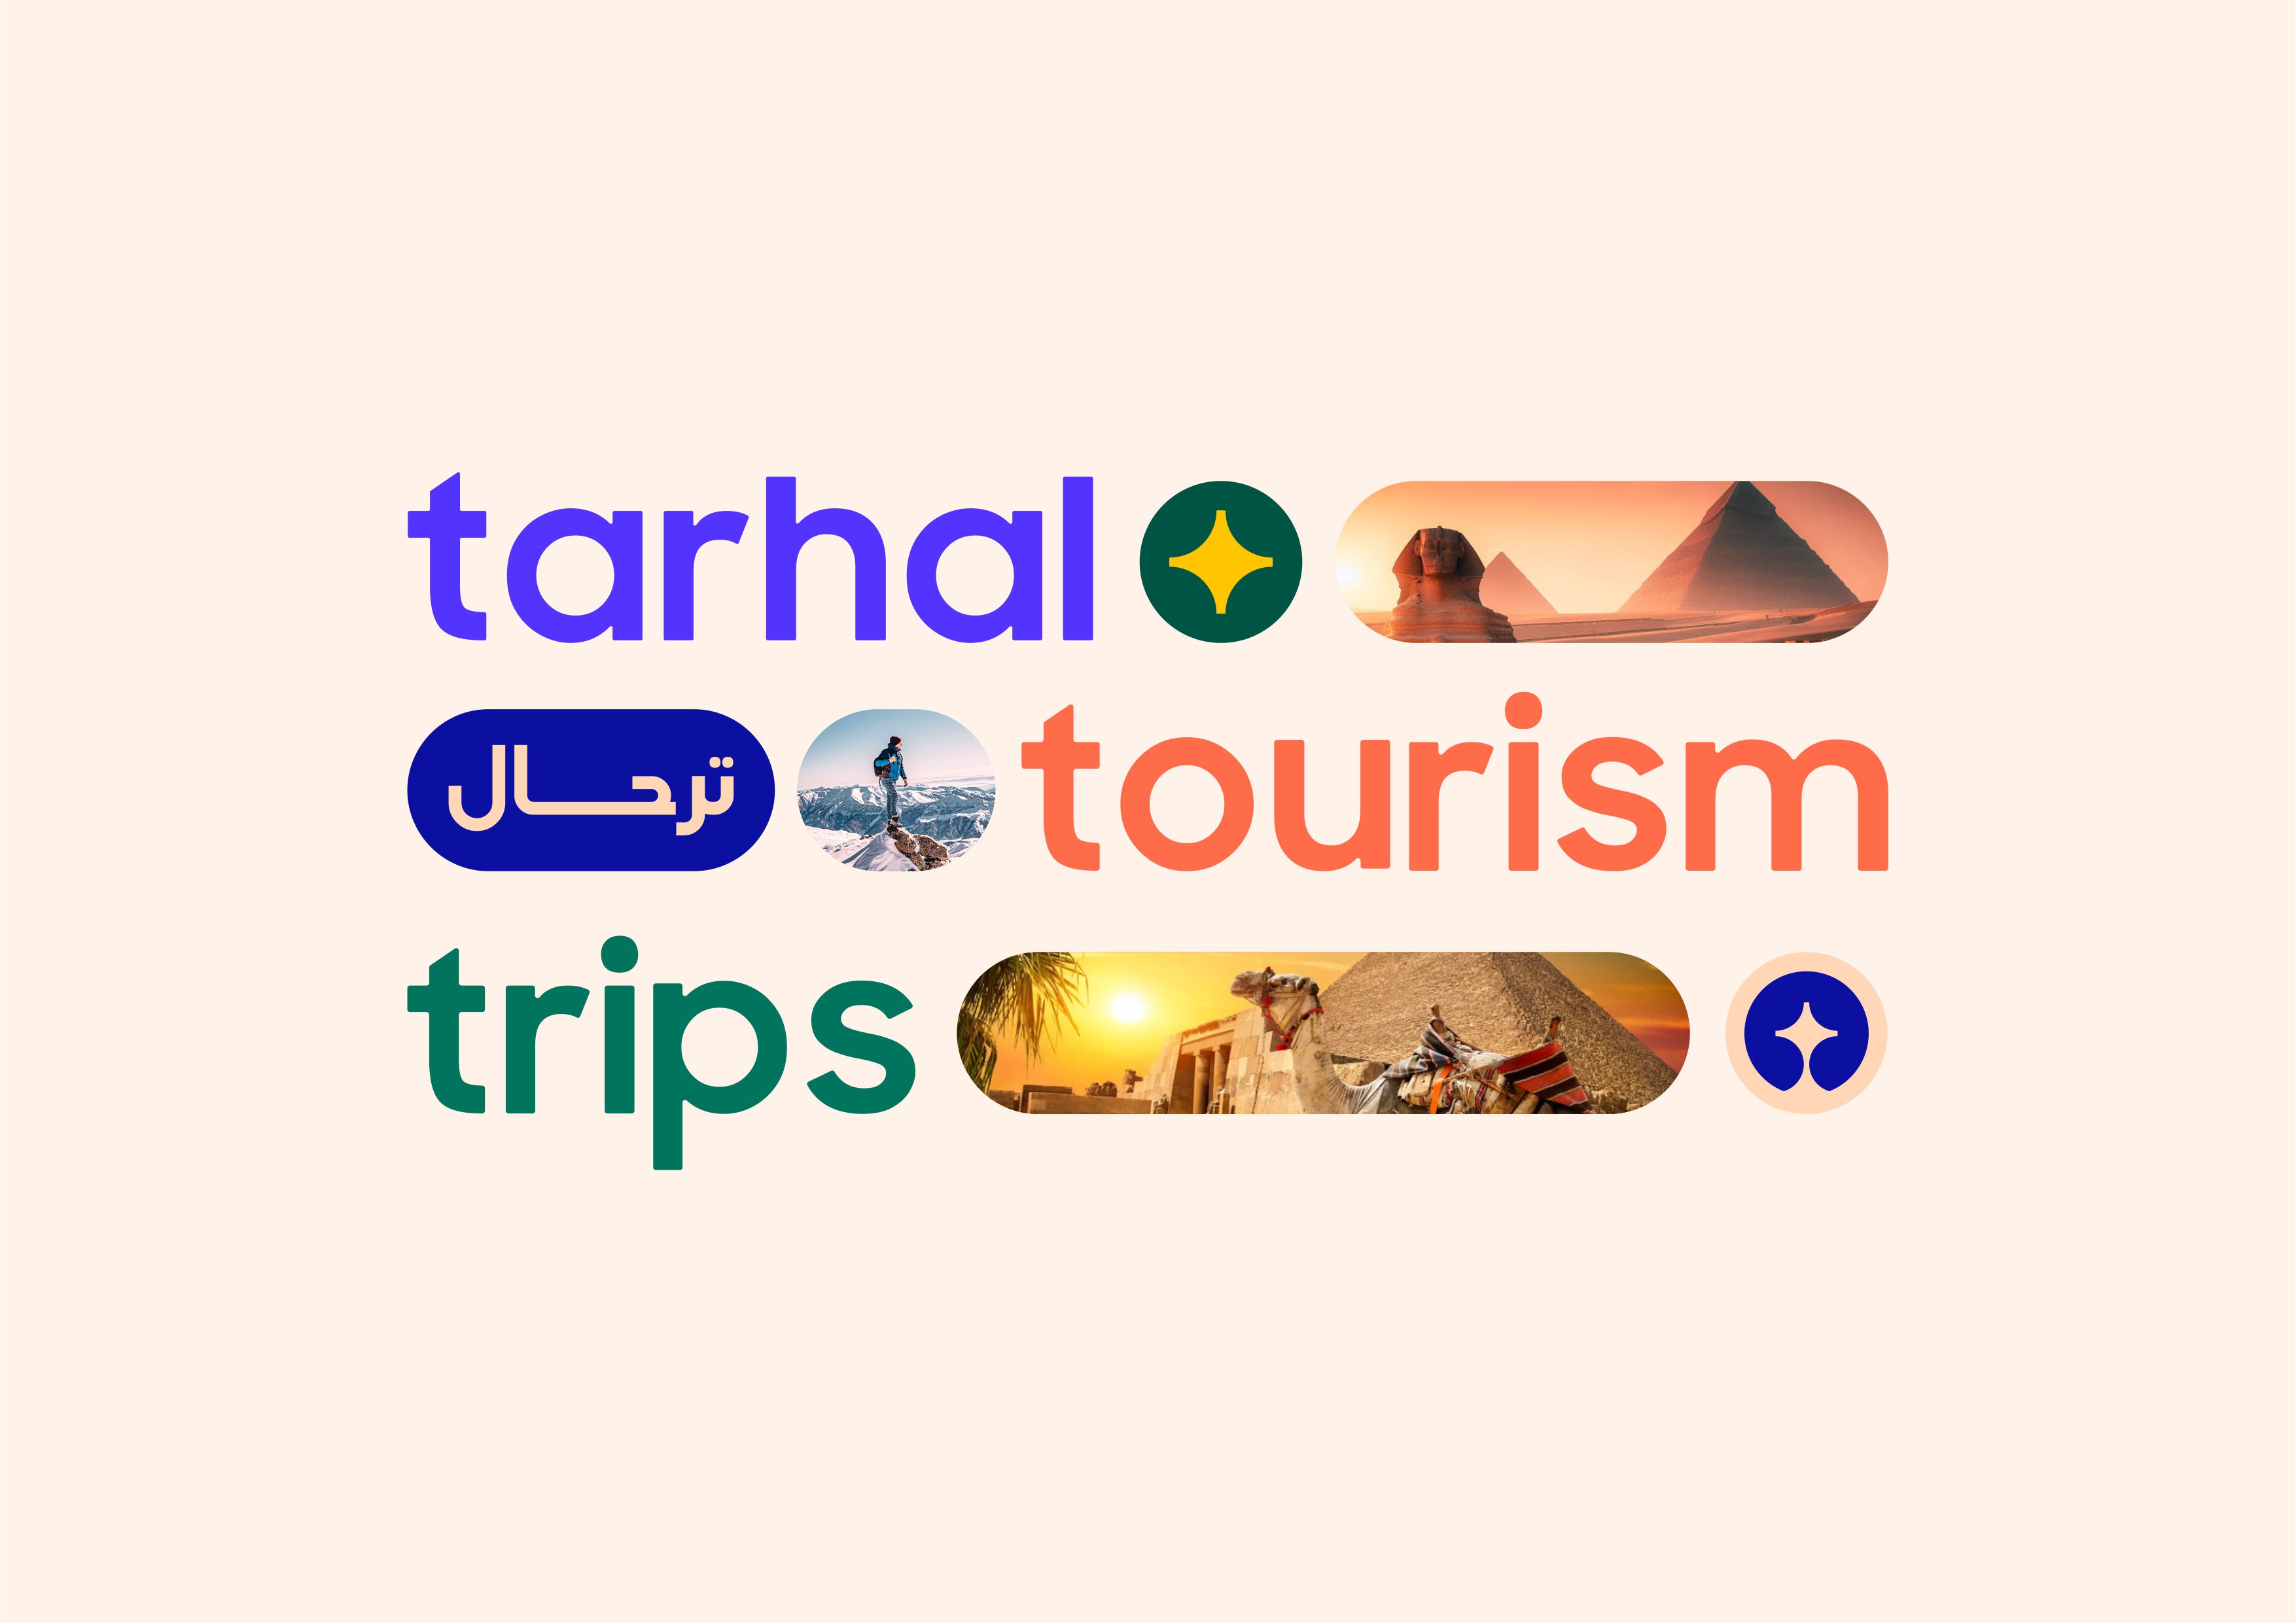 Tarhal Travel Visual Identity